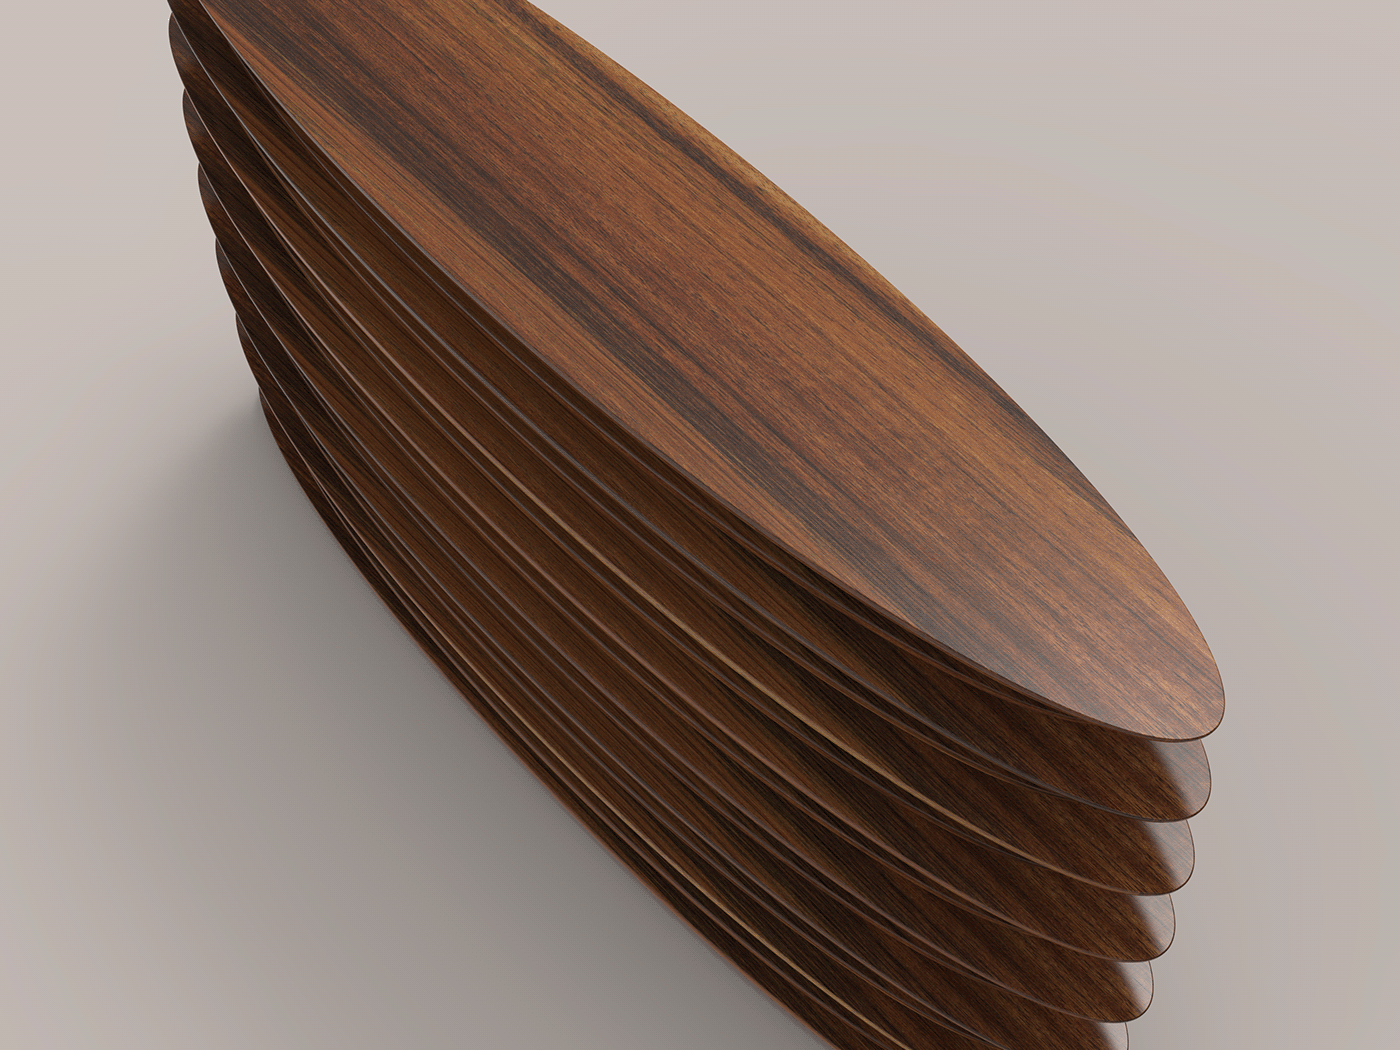 quill console furniture modern walnut wood jason phillips design jason phillips jasonphillipsdesign quills